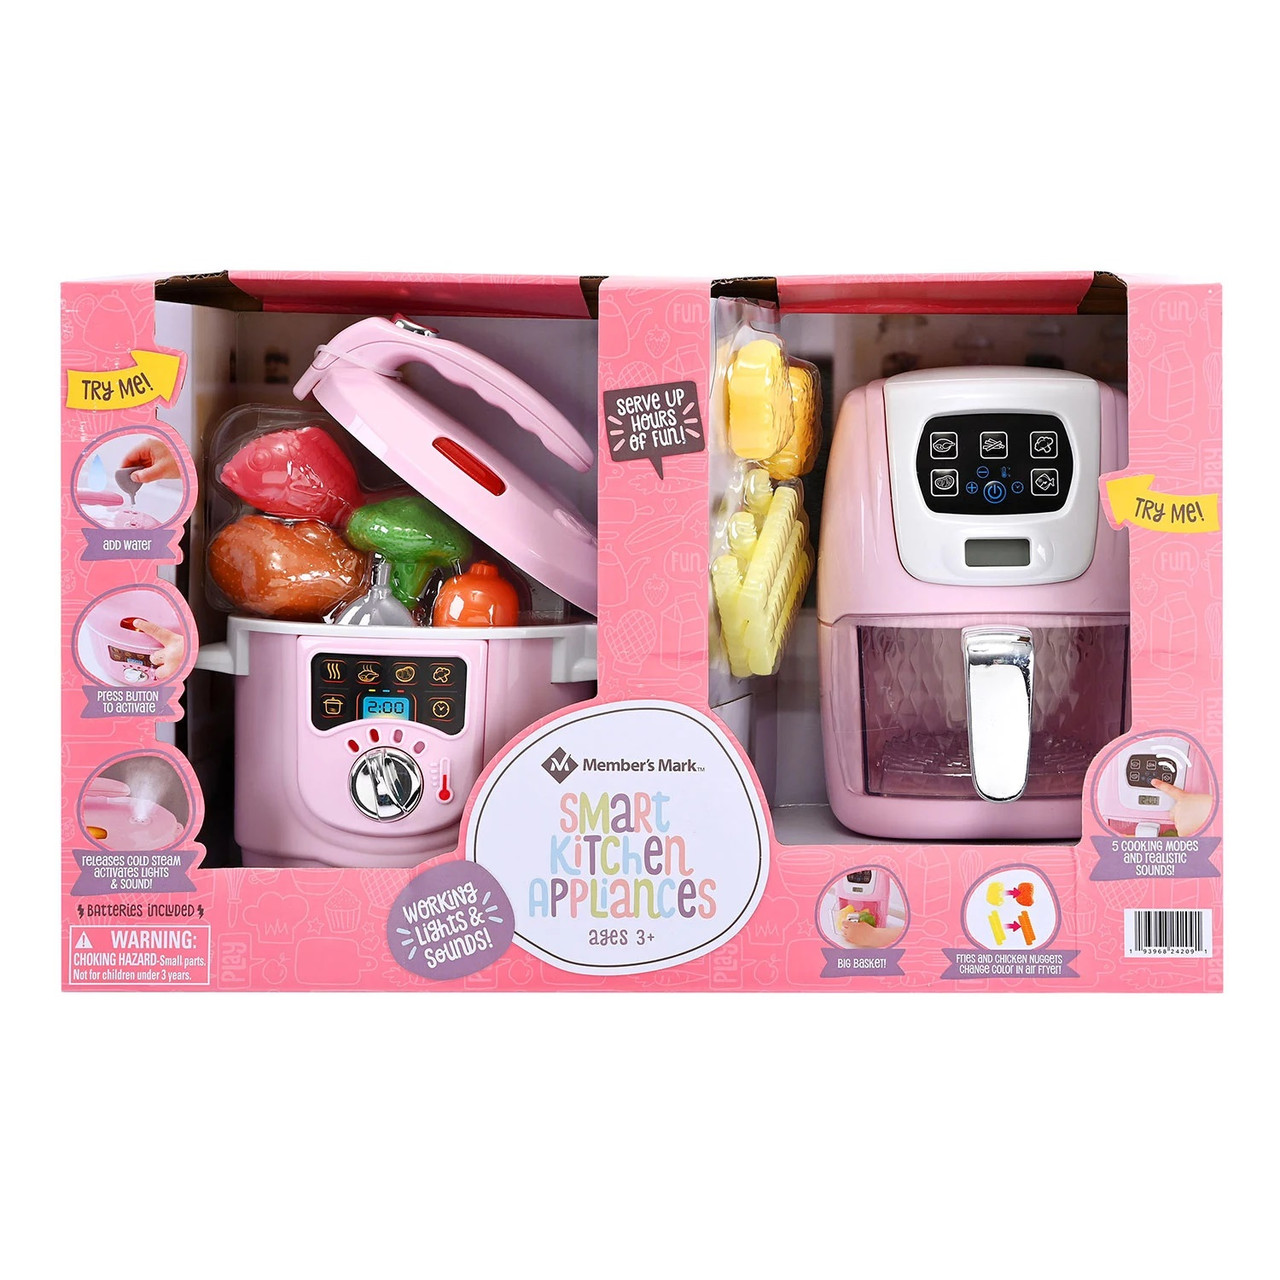 Member's Mark Smart Kitchen Appliances, Pink